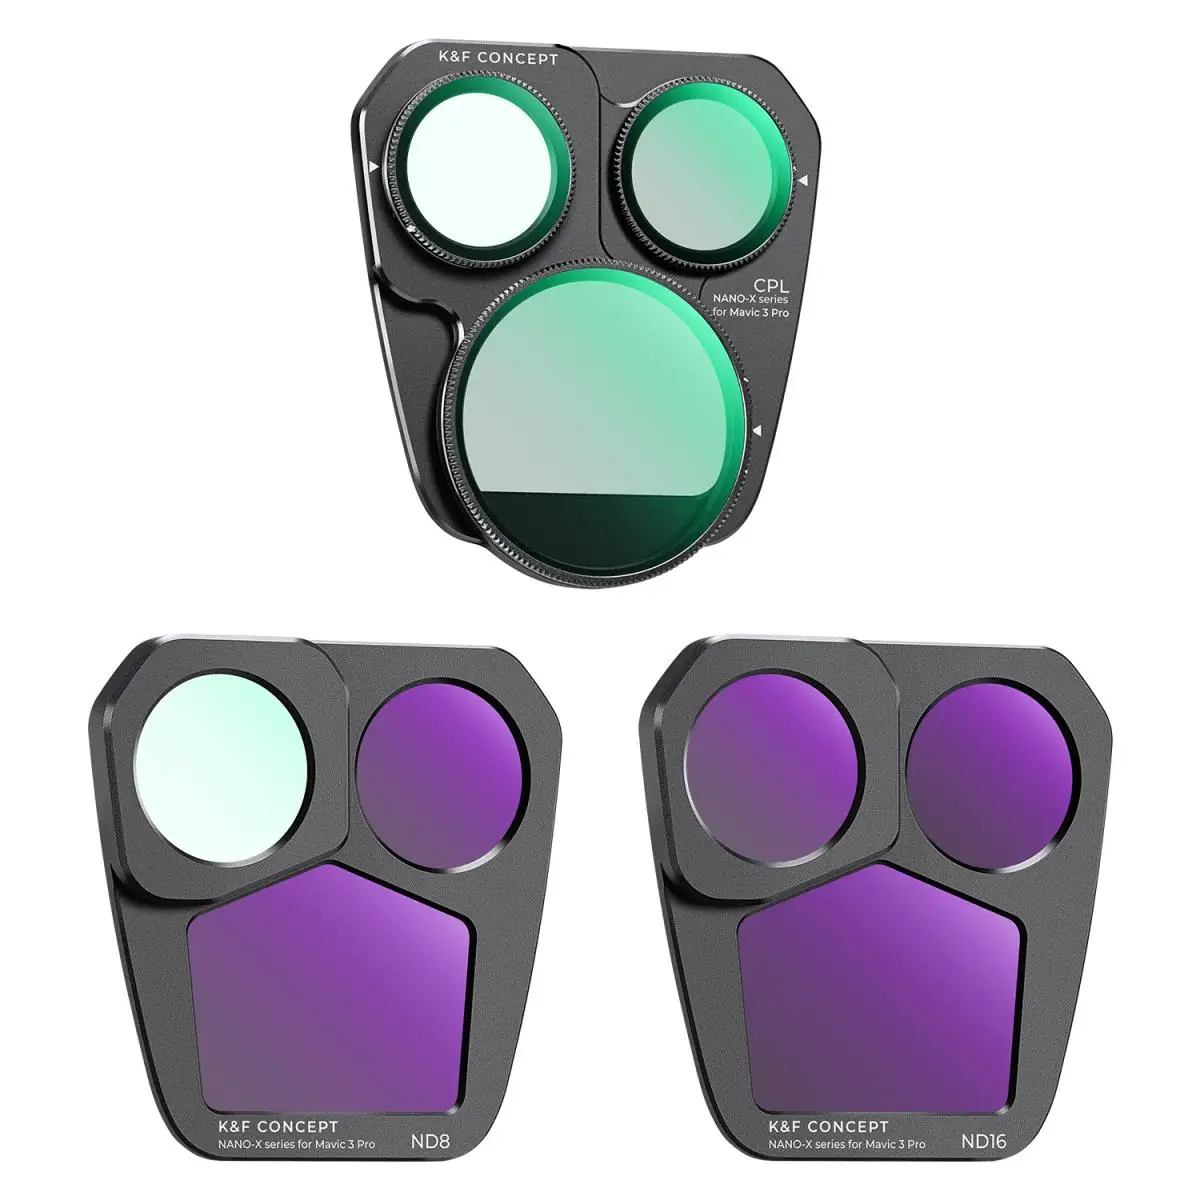 k-f-concept-drone-filter-kit-revestido-anti-reflexo-vidro-optico-hd-dji-mavic-3-pro-cpl-nd8-nd16-28-camadas-3pcs